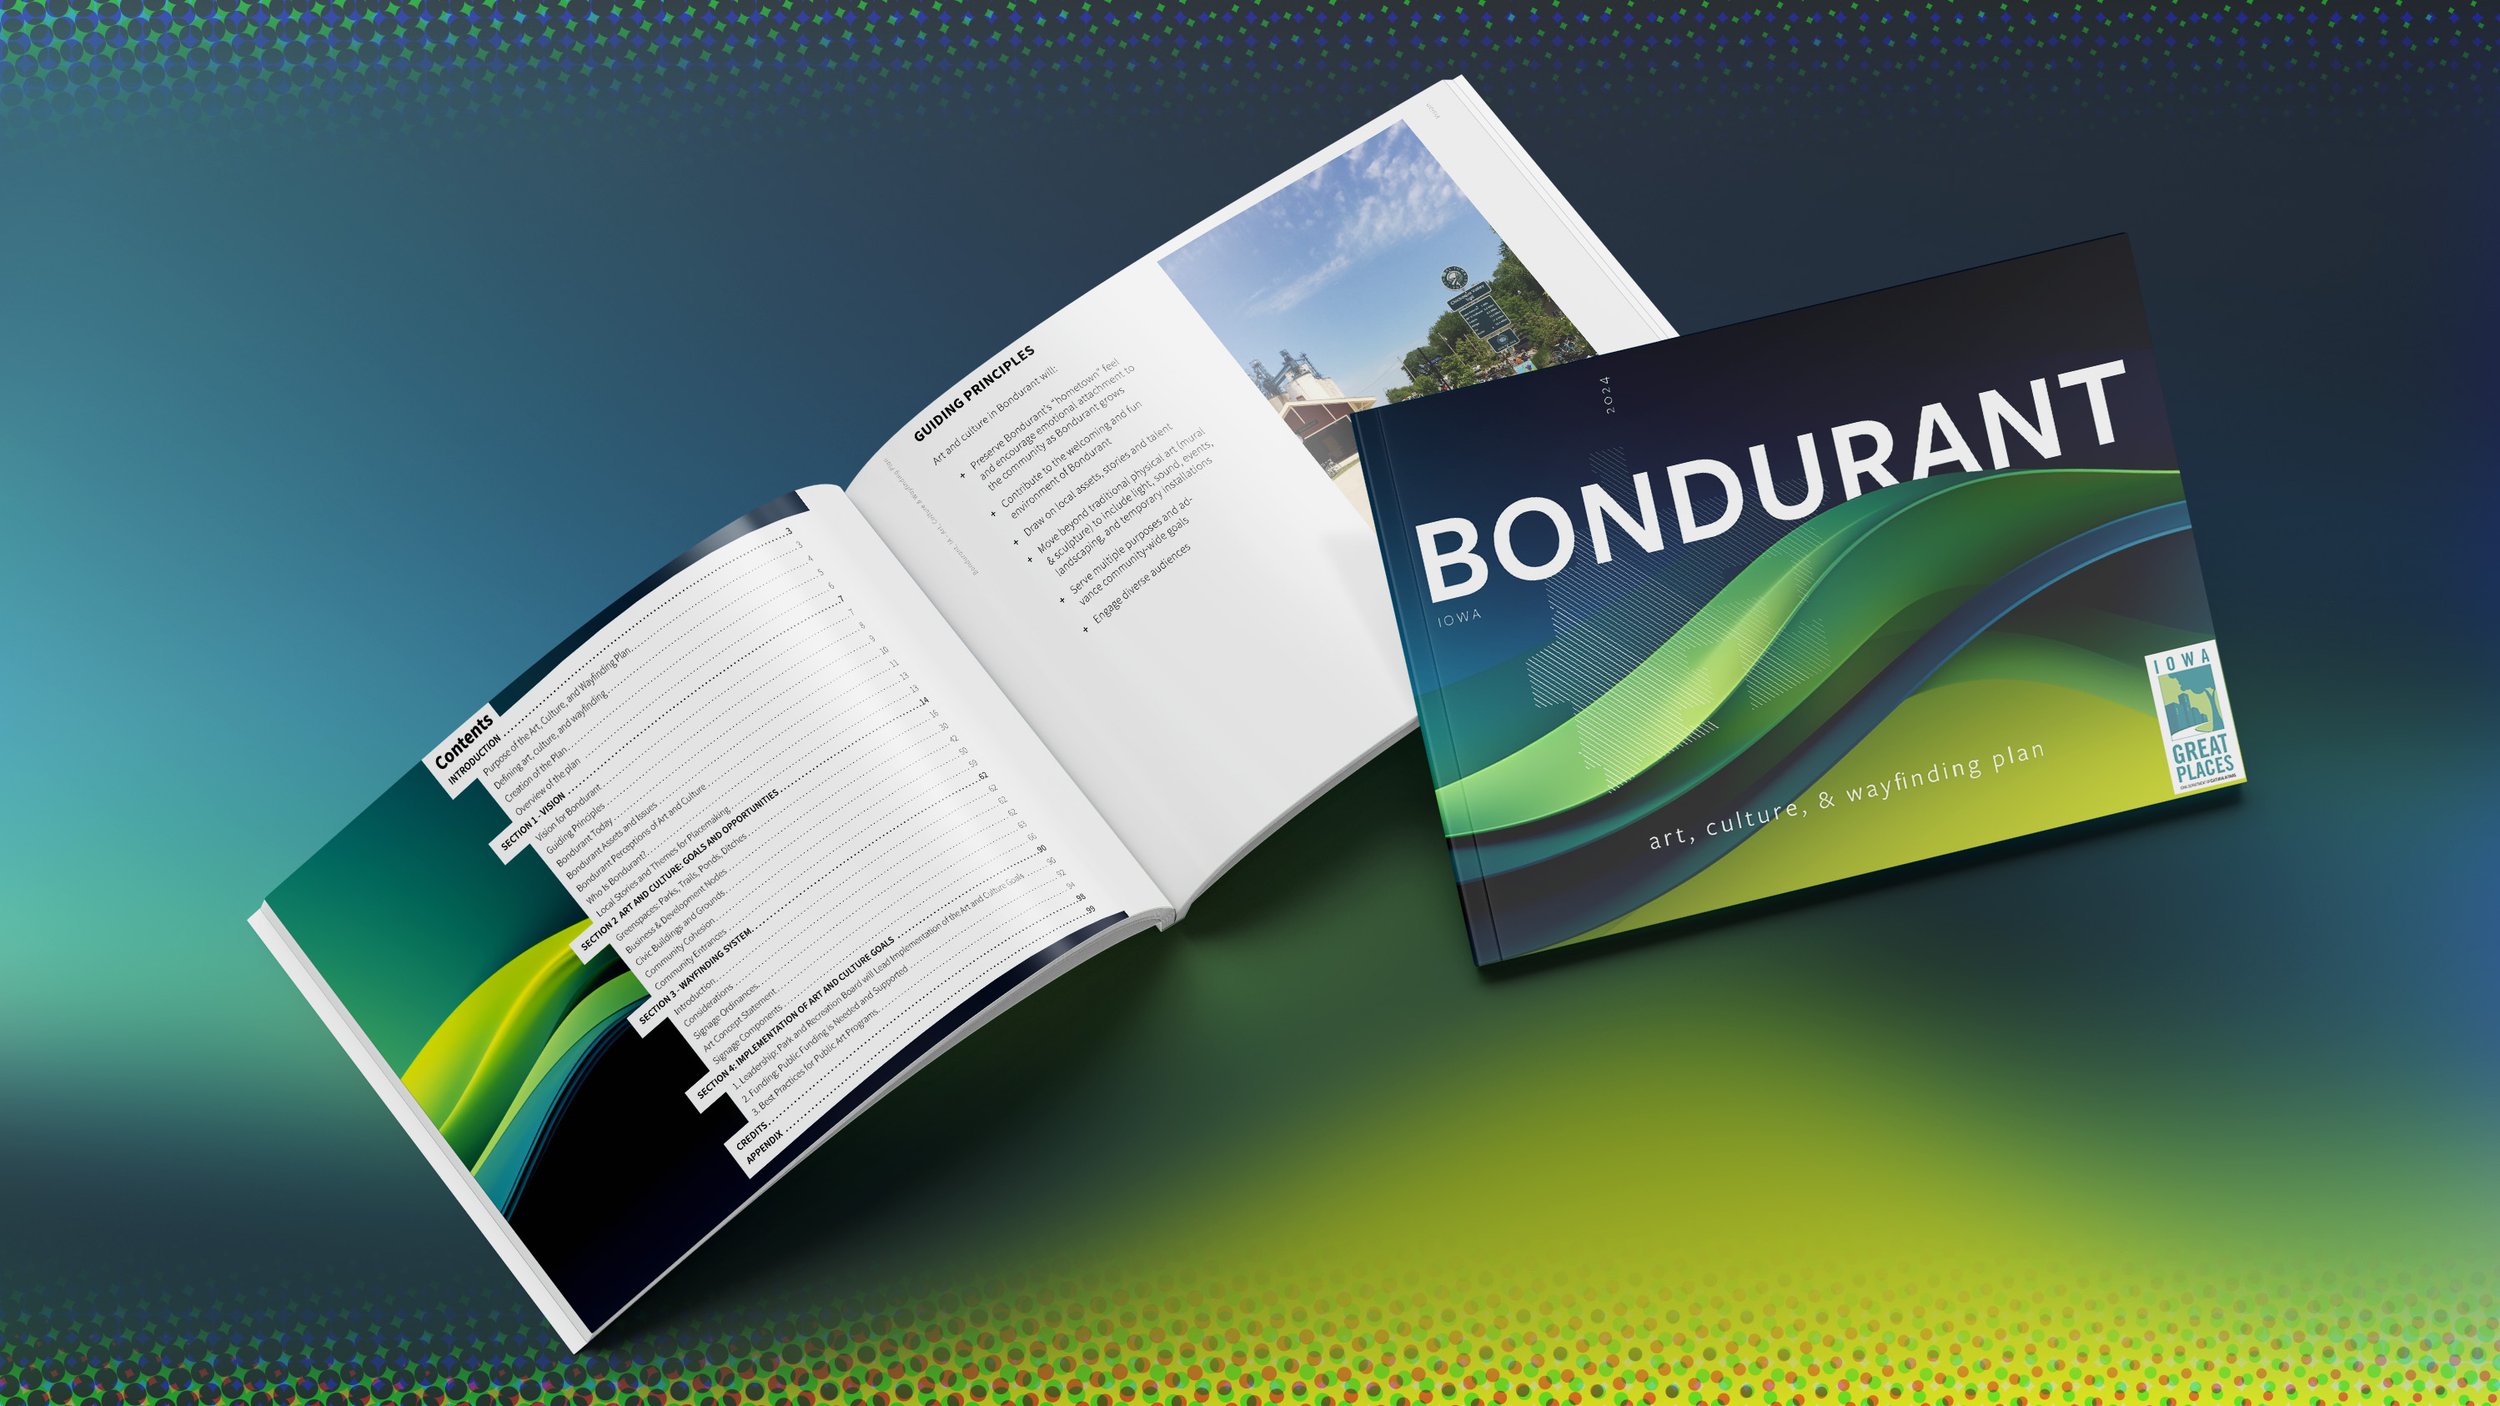 Bondurant, IA - Art, Culture, &amp; Wayfinding Plan